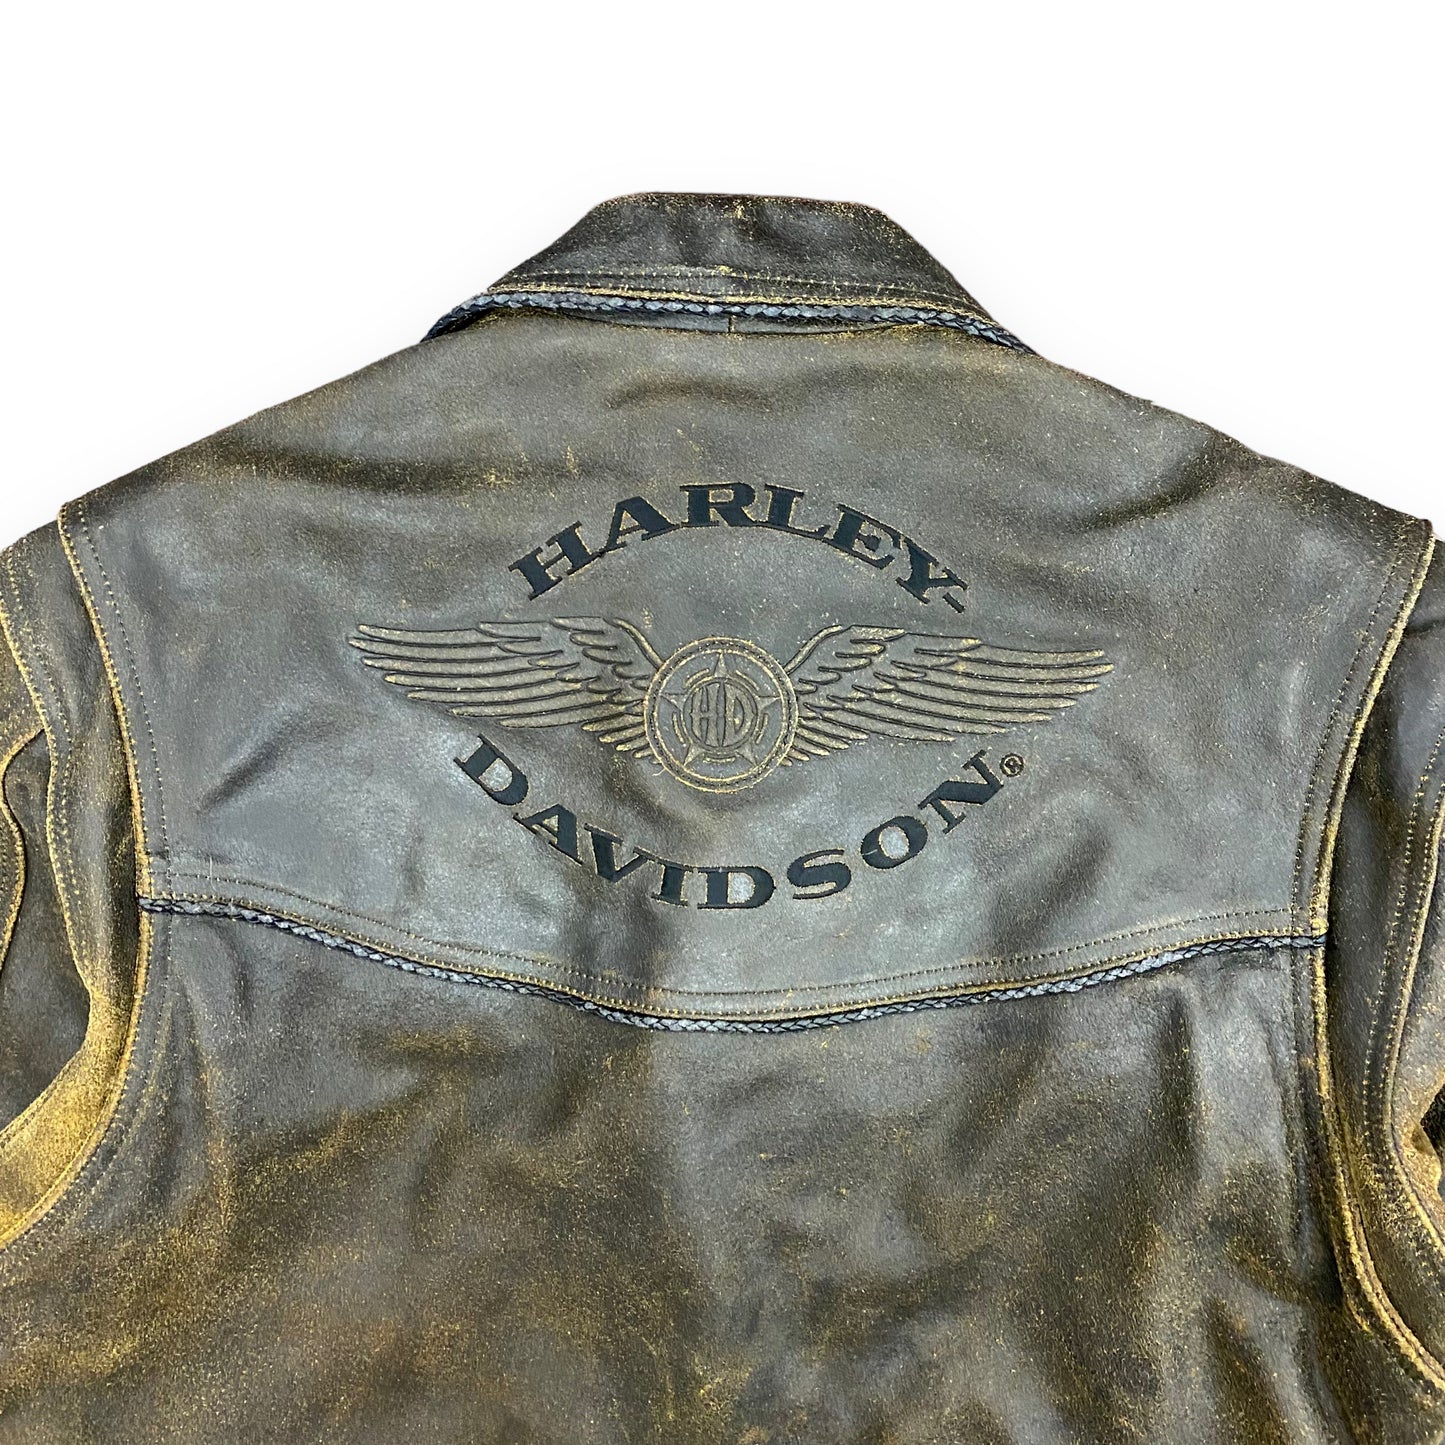 Harley Davidson Motorcycles Billings Brown Leather Riding Jacket - Size Medium